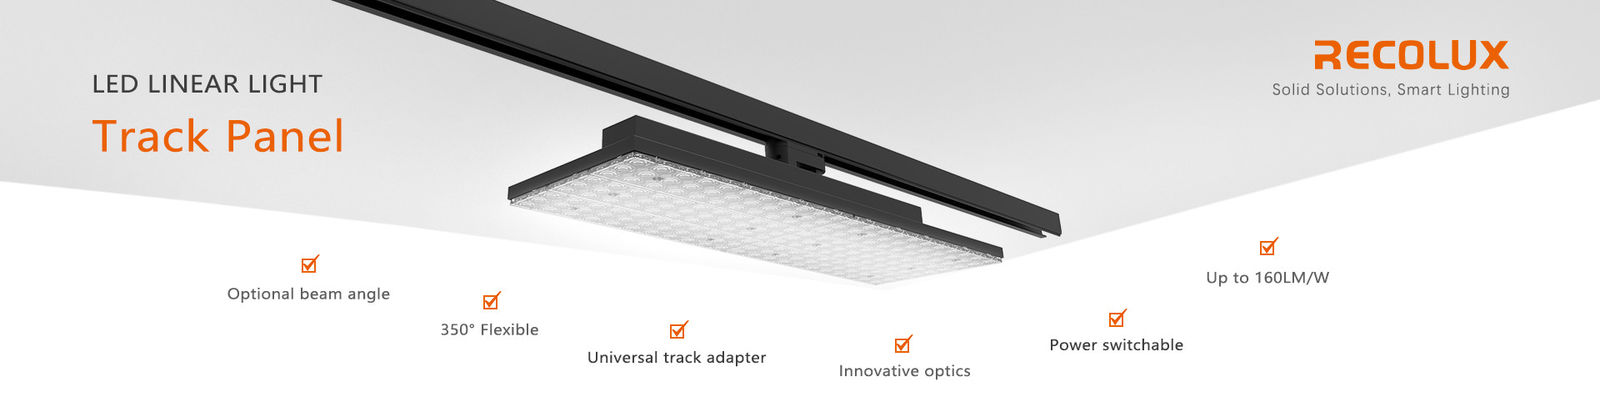 Panel Track Linear LED